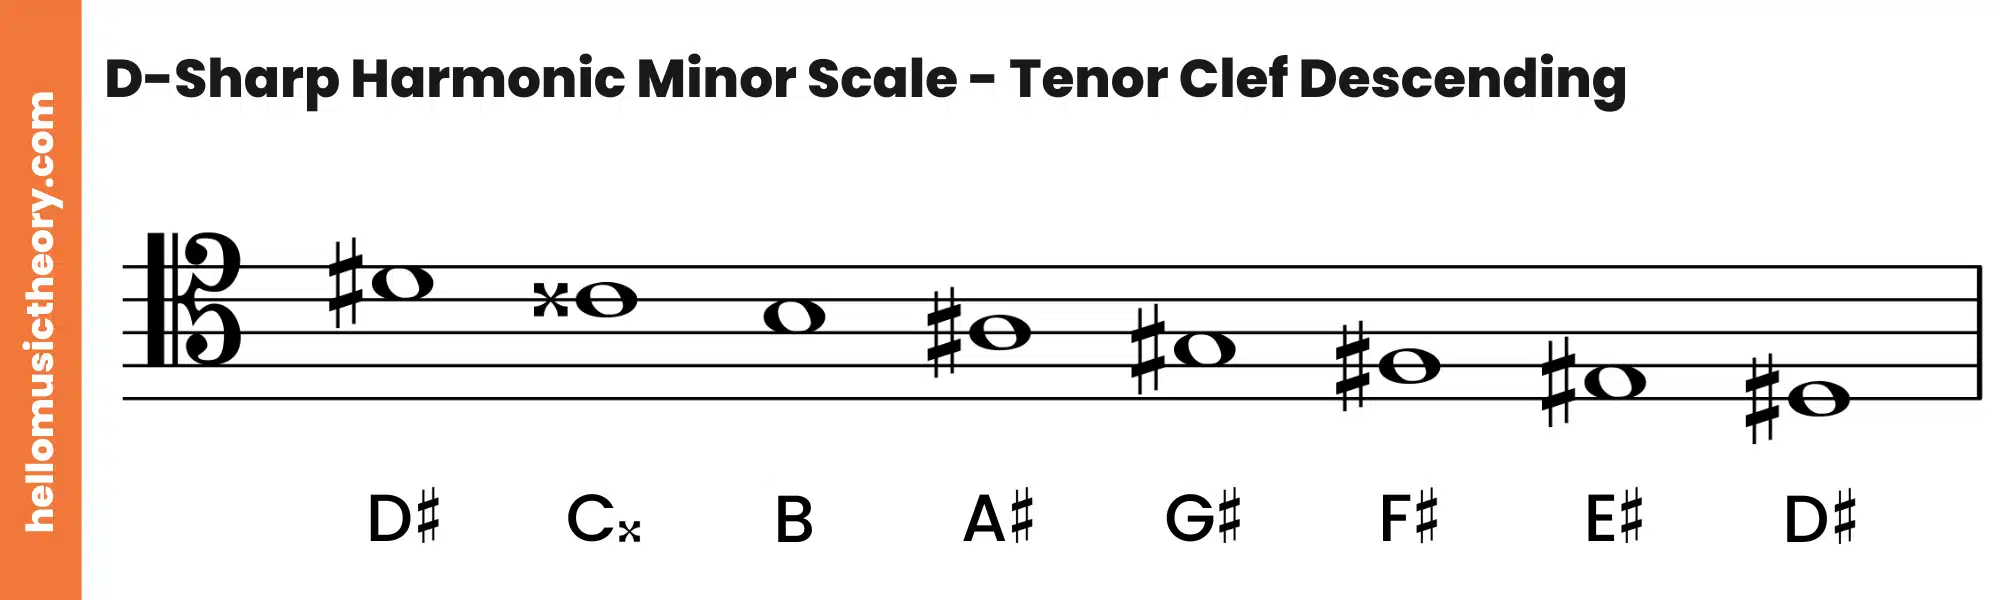 D-Sharp Harmonic Minor Scale Tenor Clef Descending